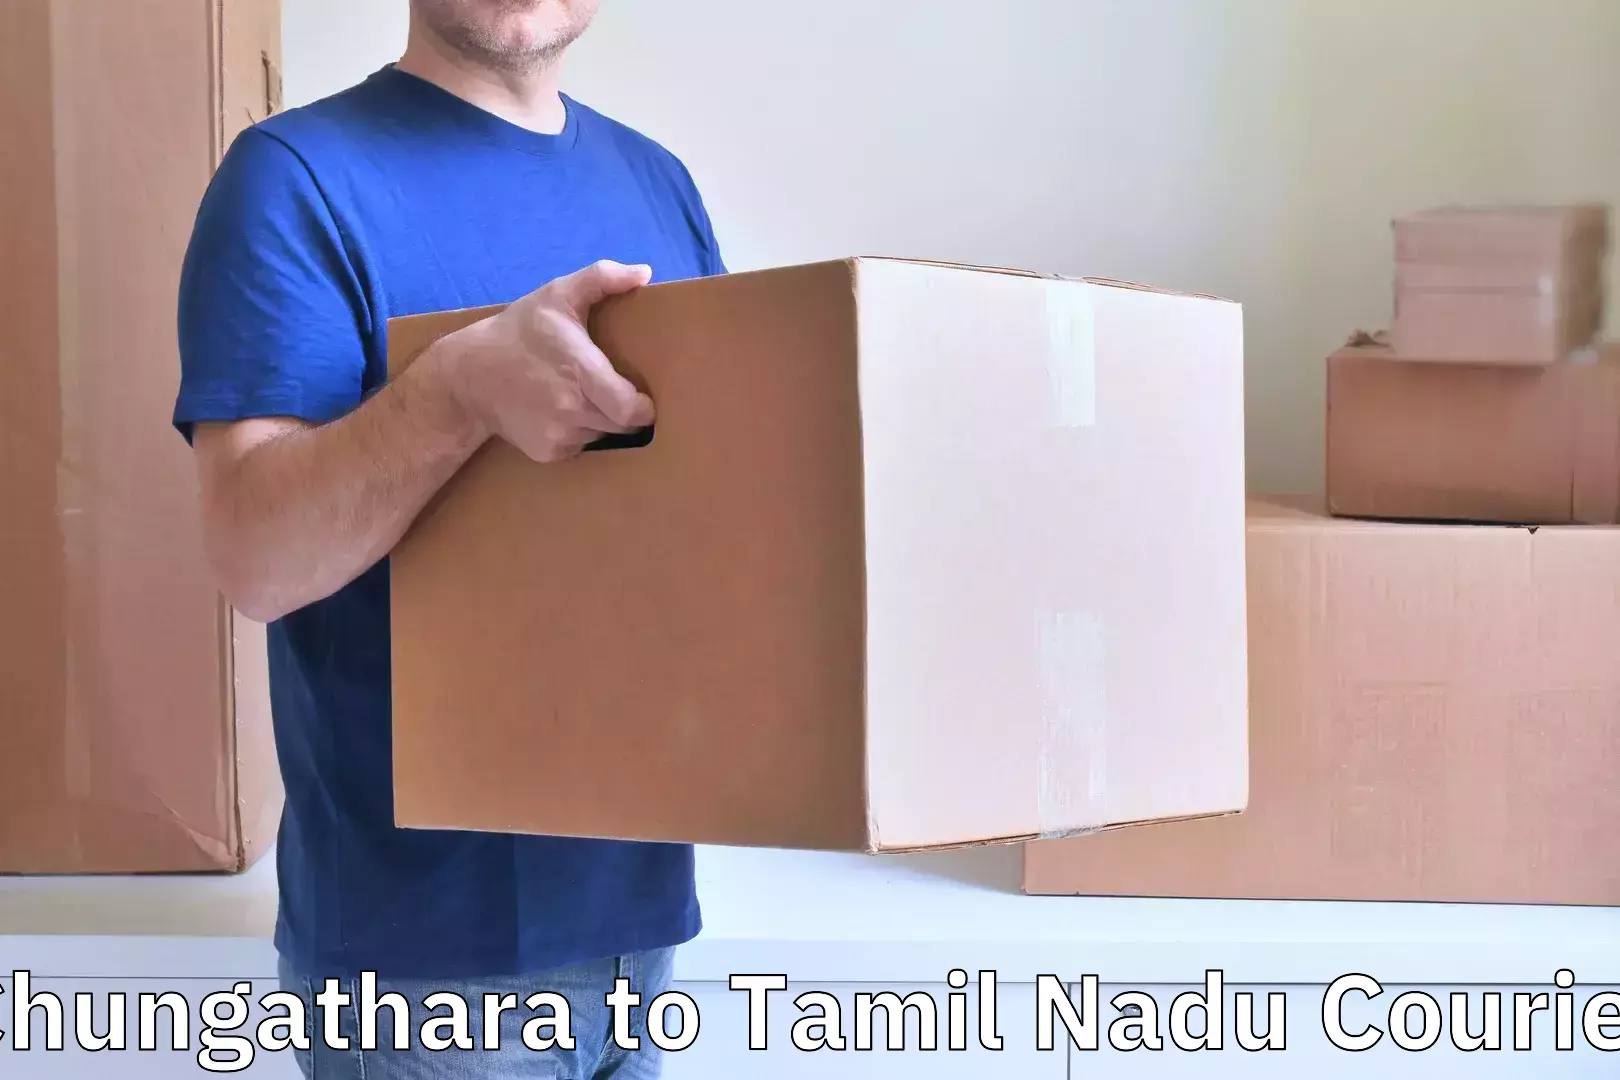 Electronic items luggage shipping Chungathara to Anna University Chennai